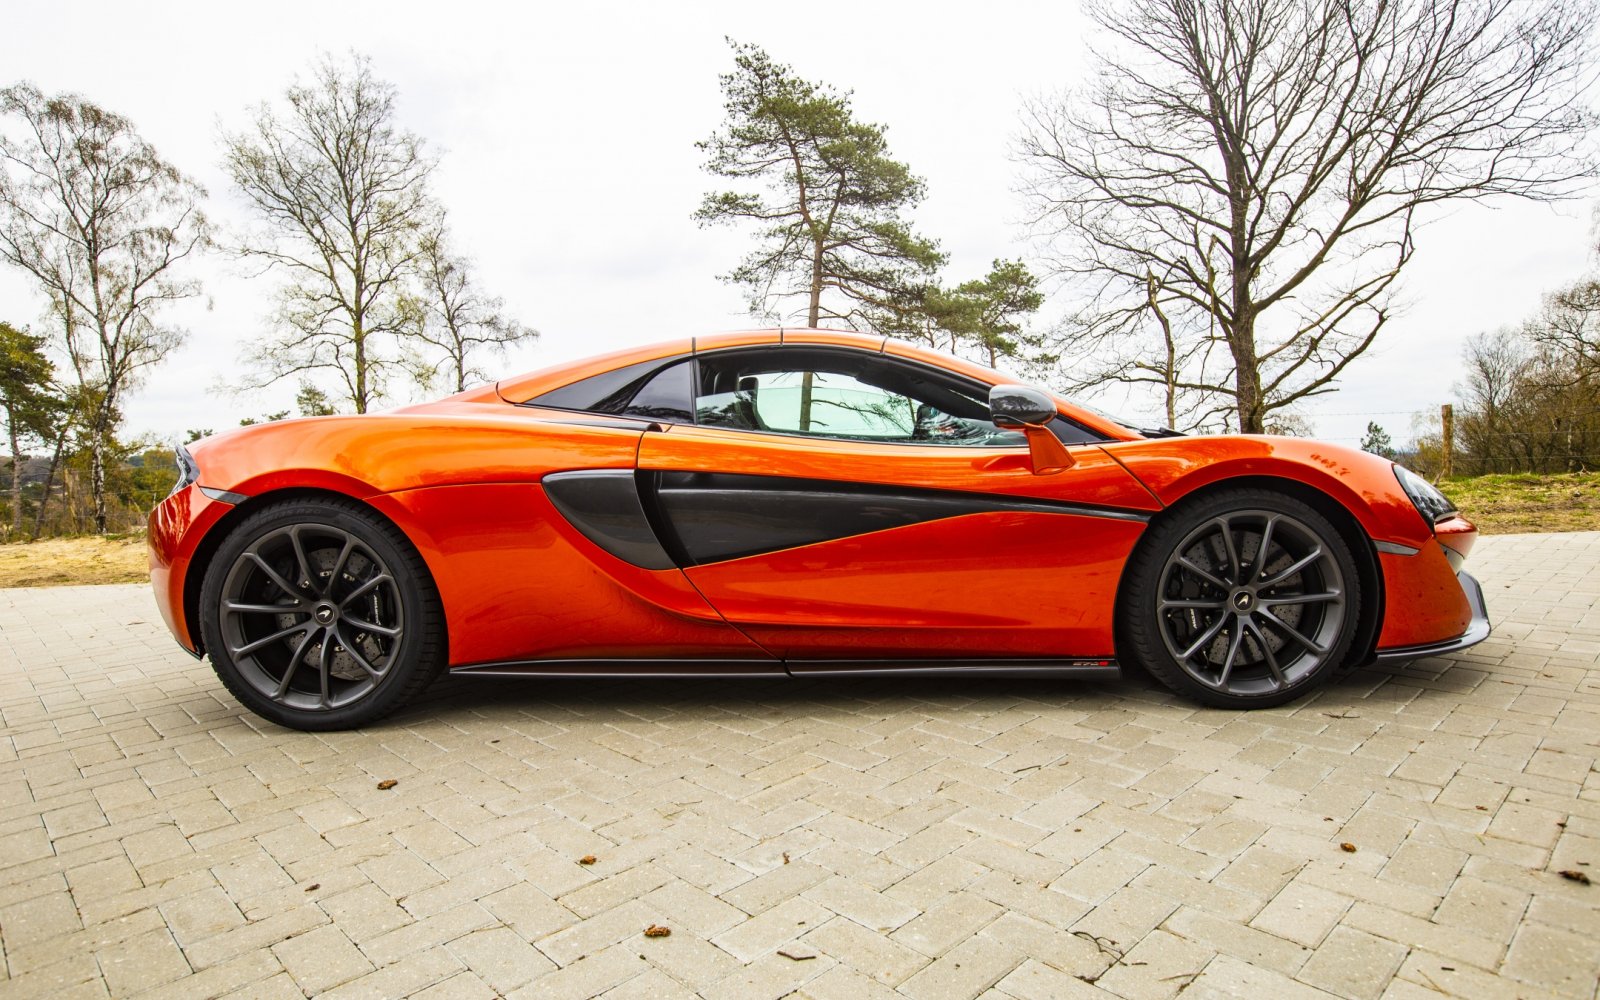 The McLaren 570S Spider is irresistible